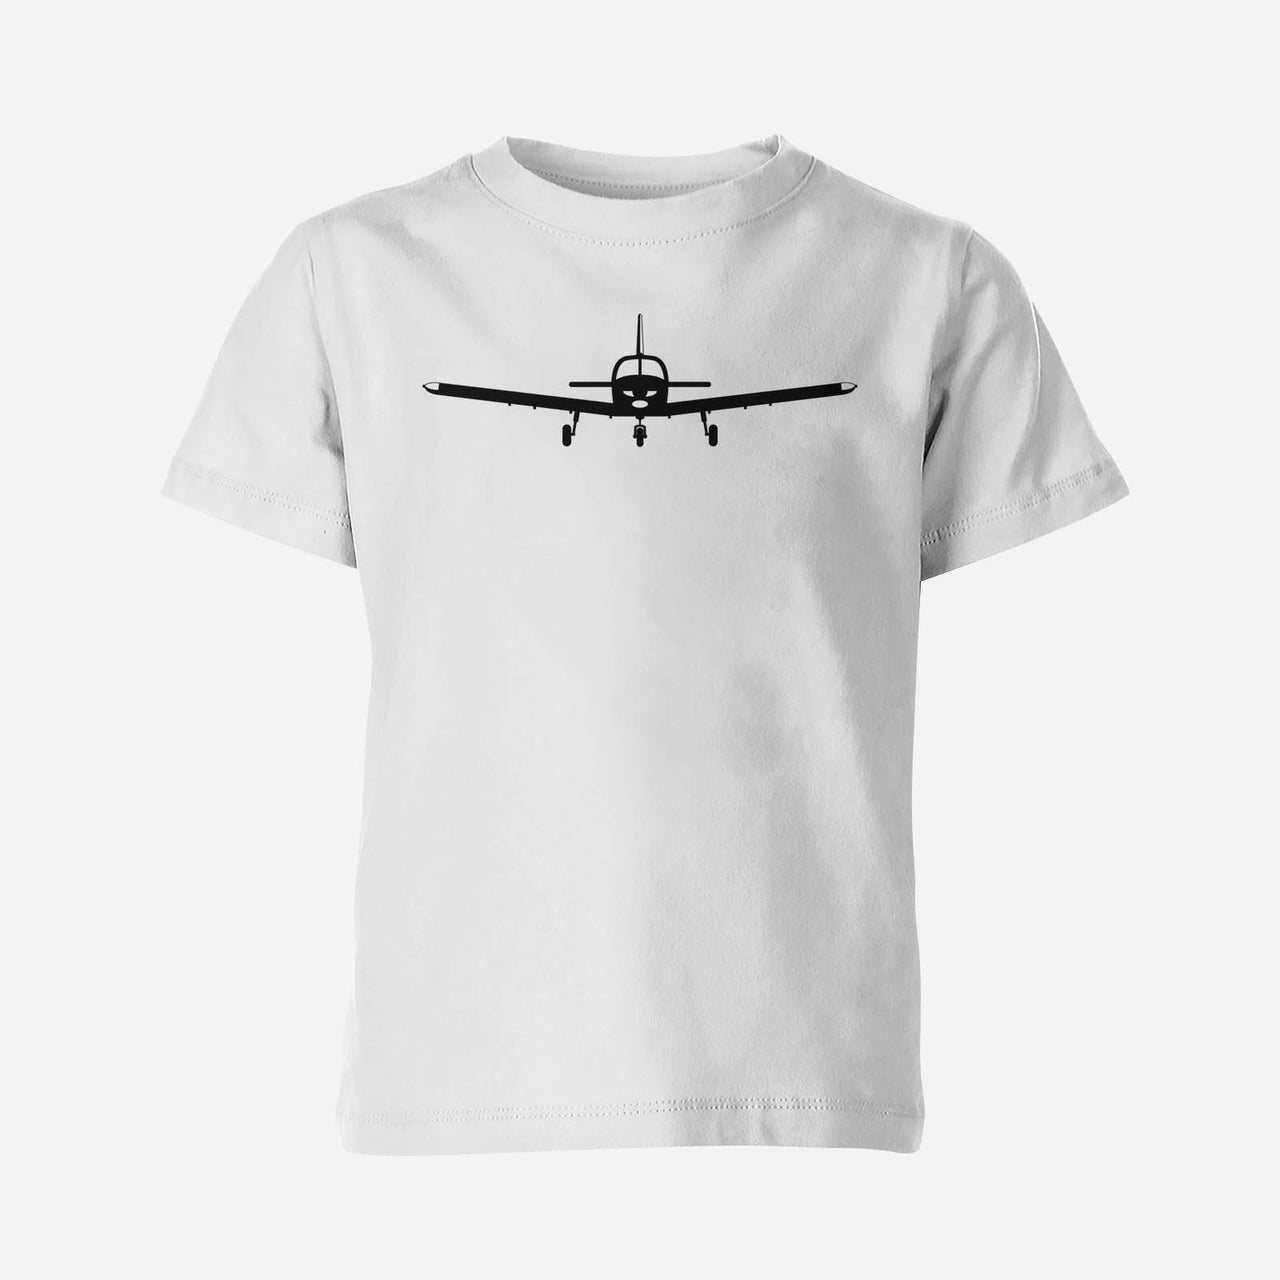 Piper PA28 Silhouette Designed Children T-Shirts